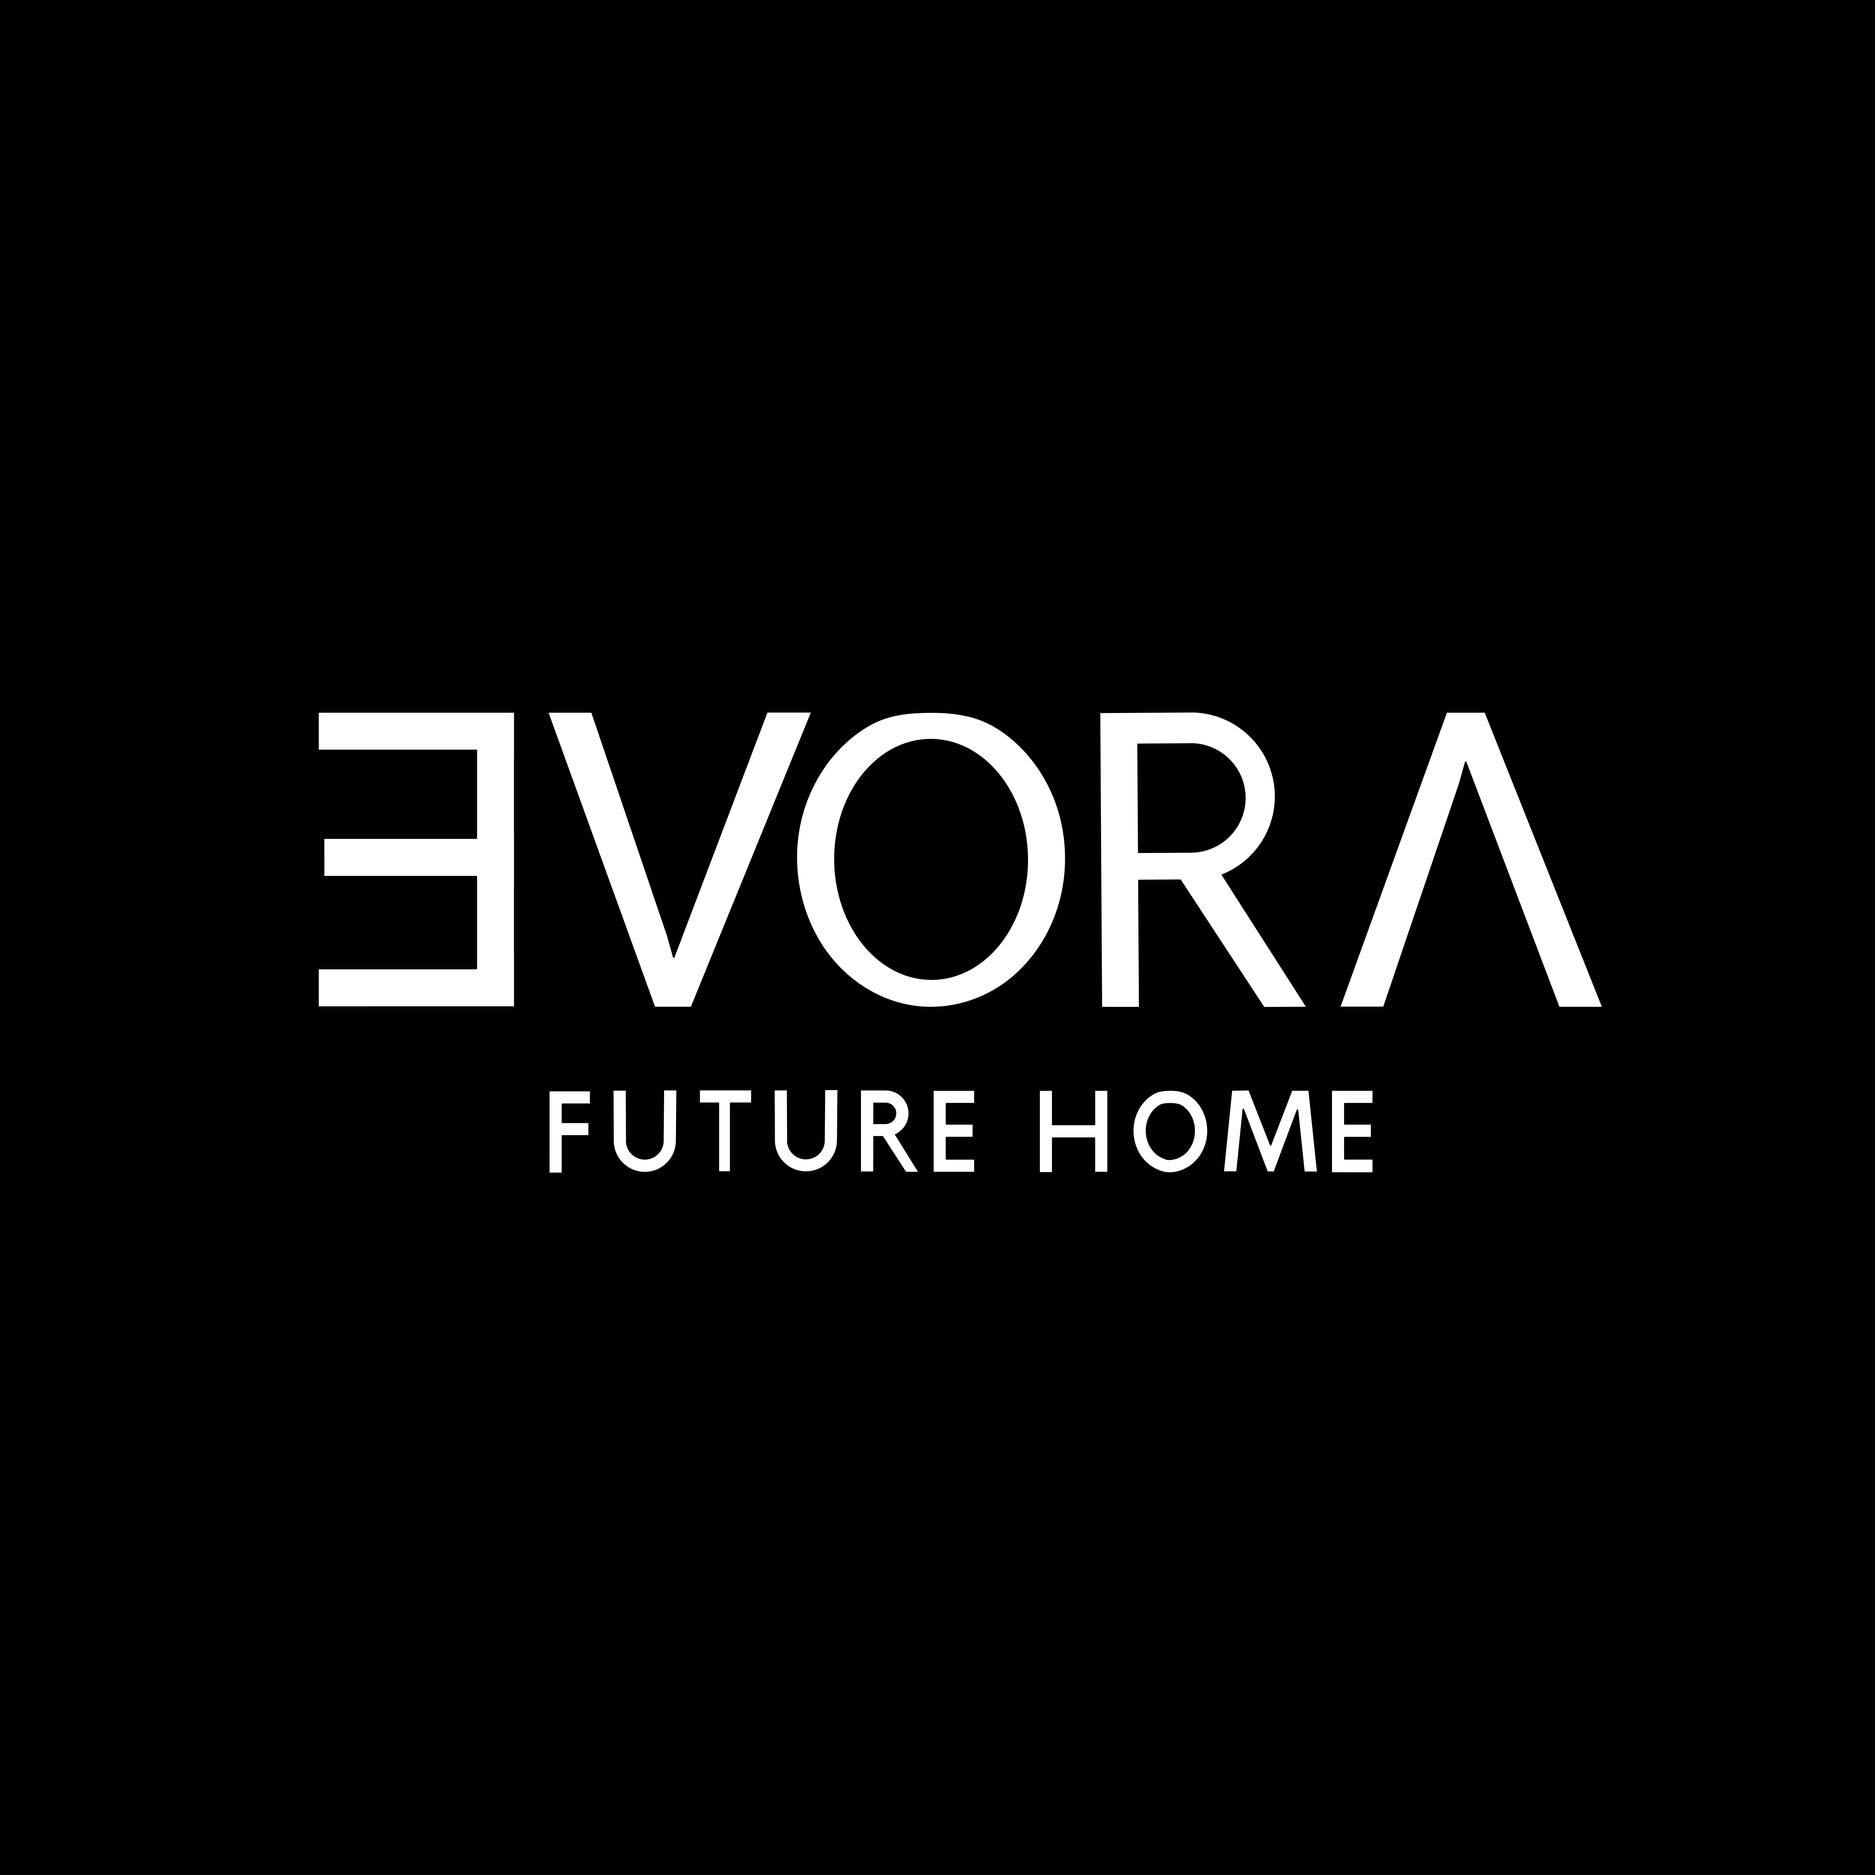 EVORA Future Home